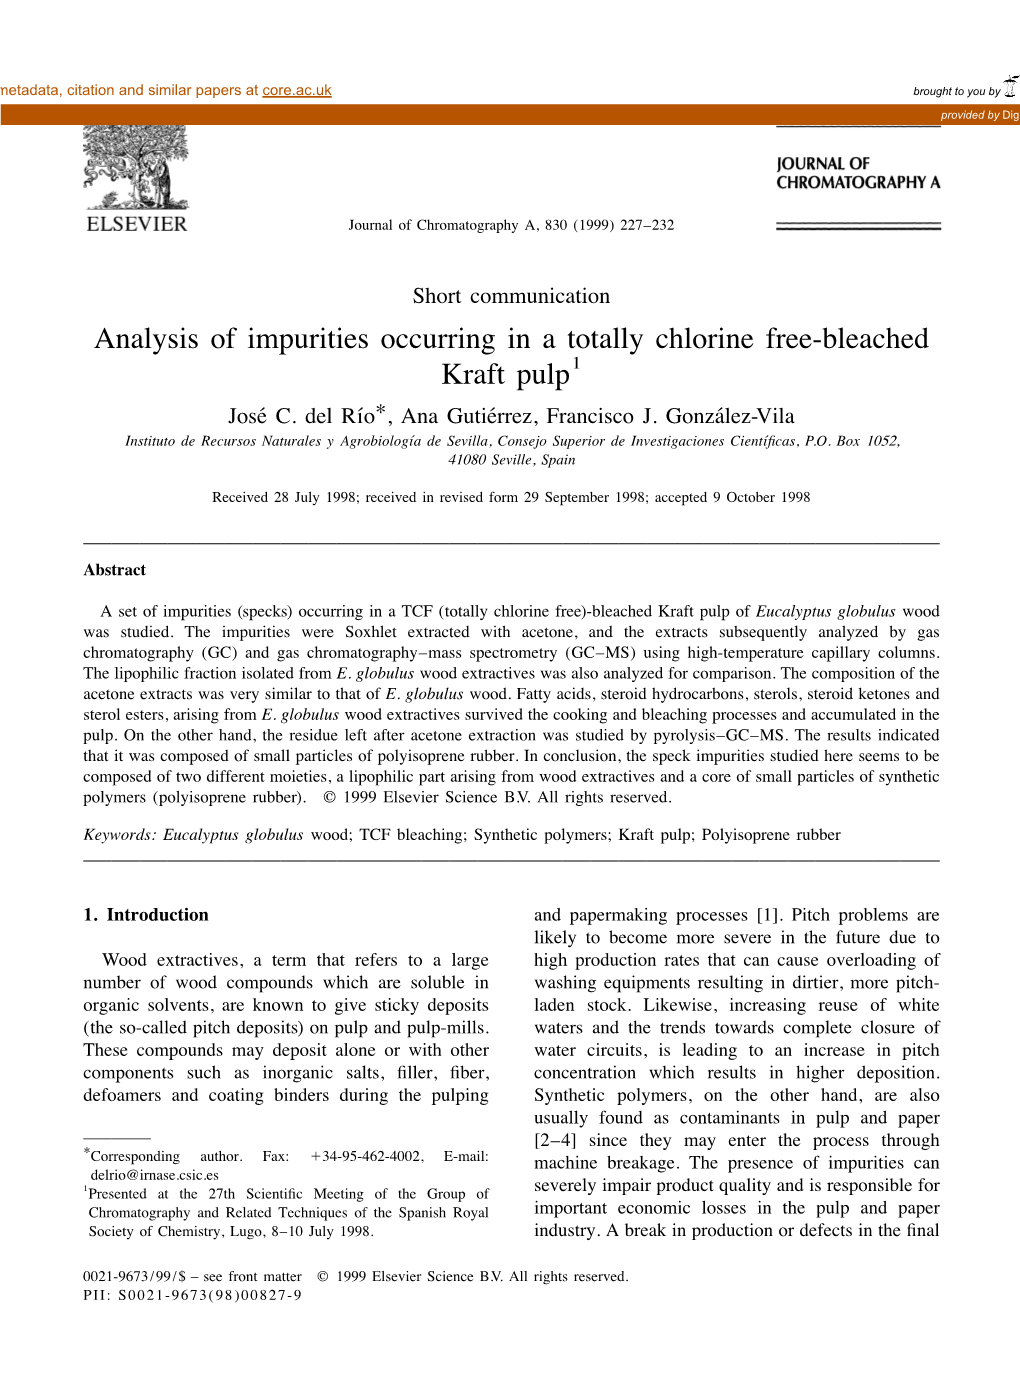 Analysis of Impurities Occurring in a Totally Chlorine Free-Bleached Kraft Pulp1 Jose´´ C